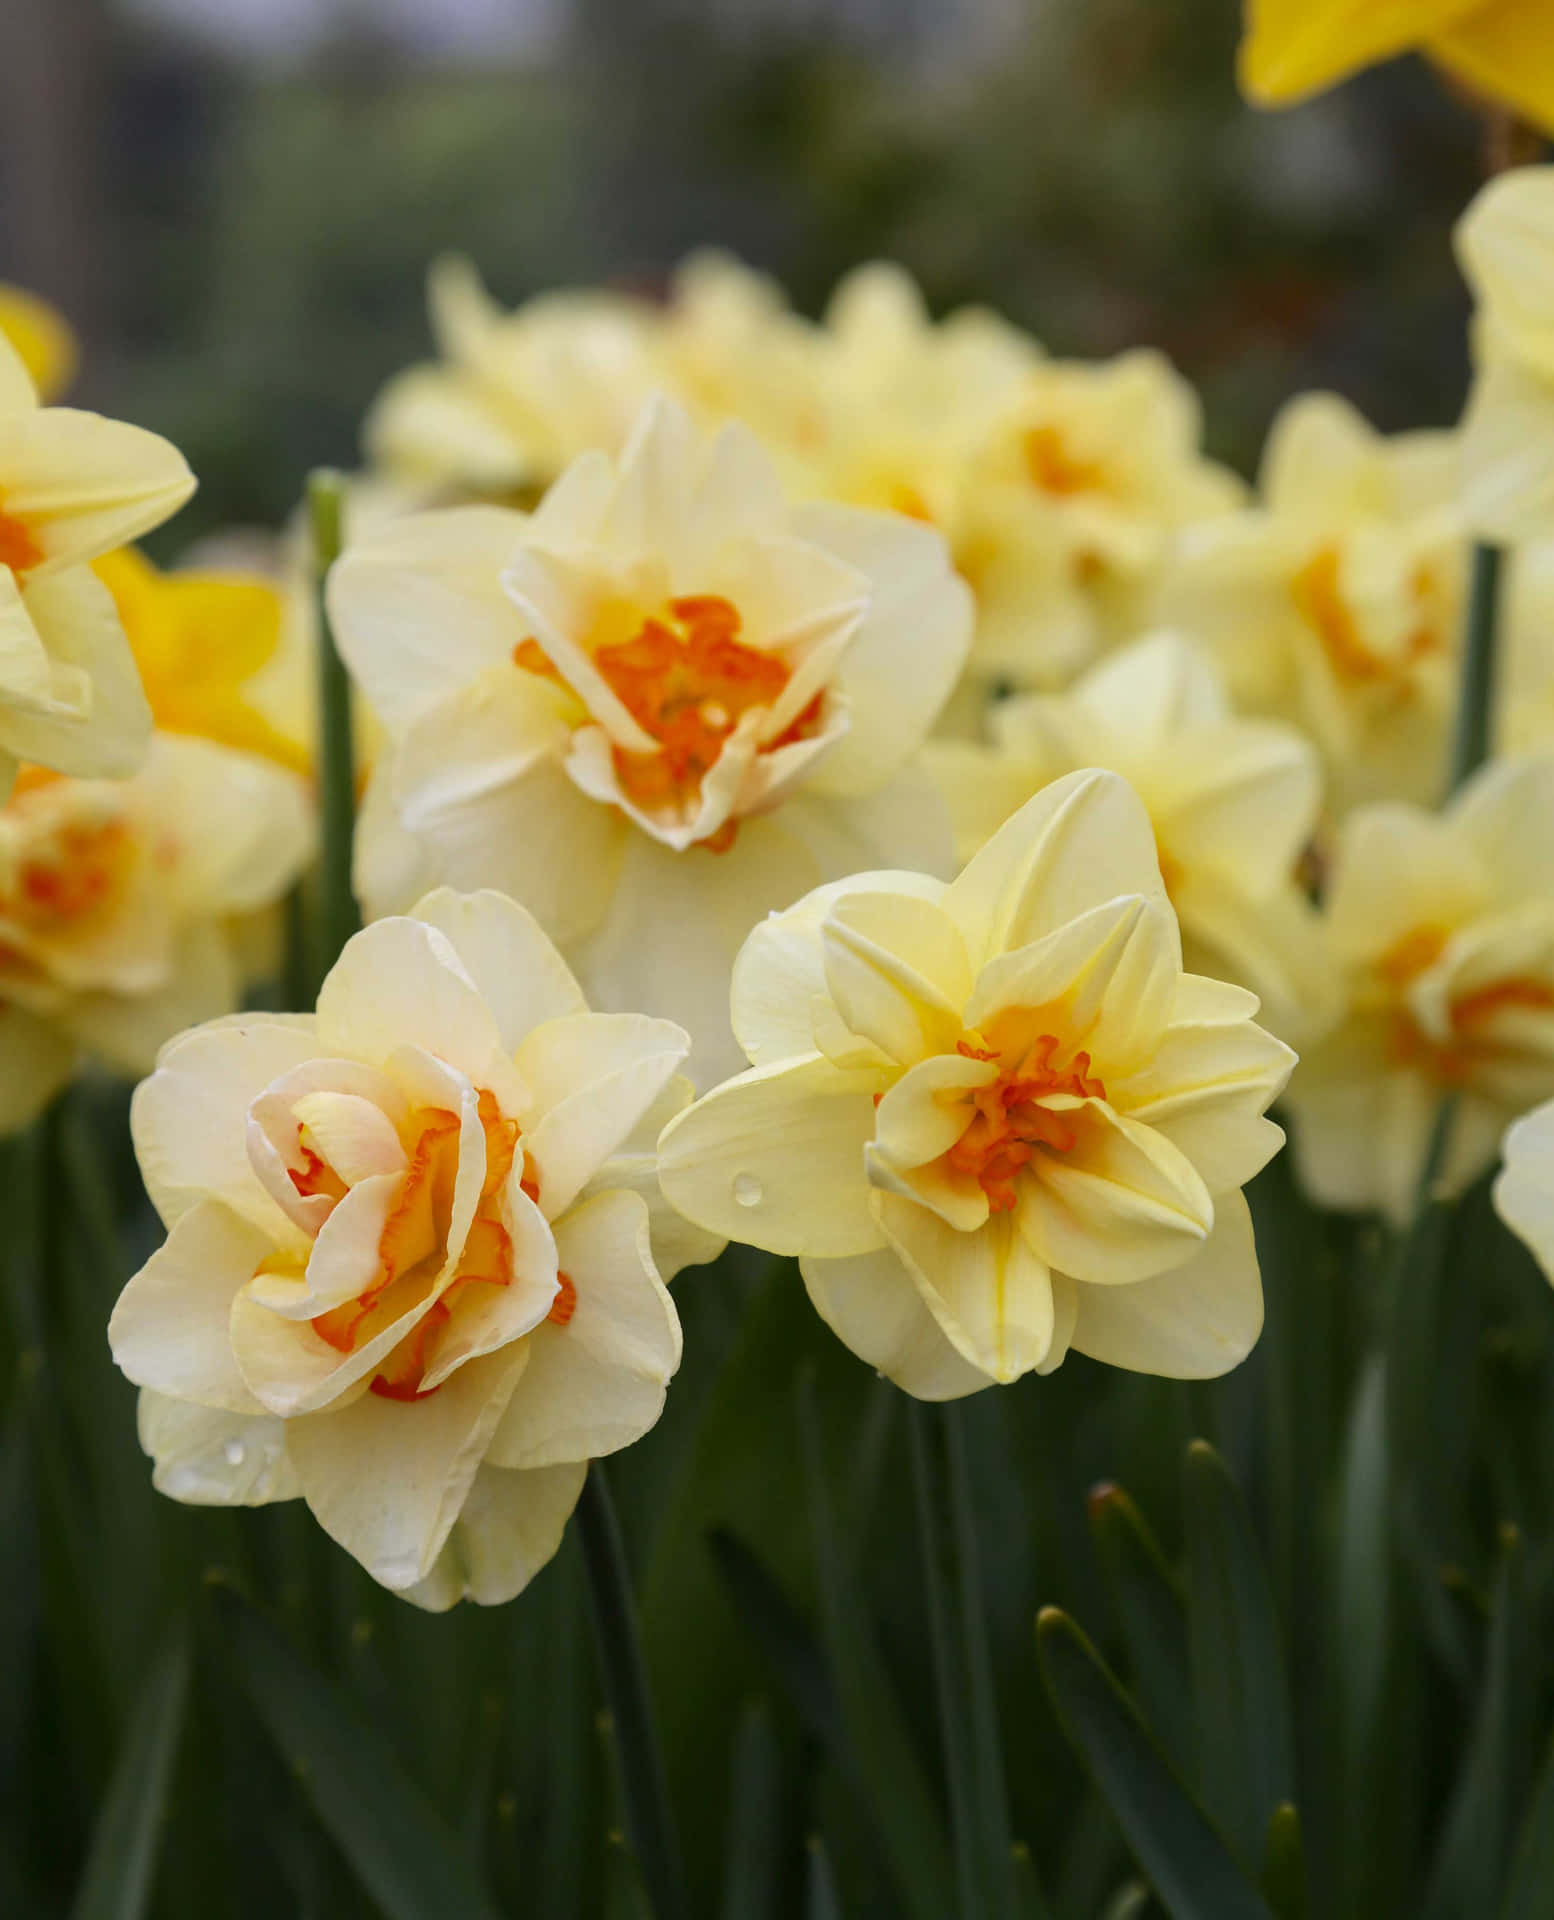 A Vibrant Yellow Daffodil